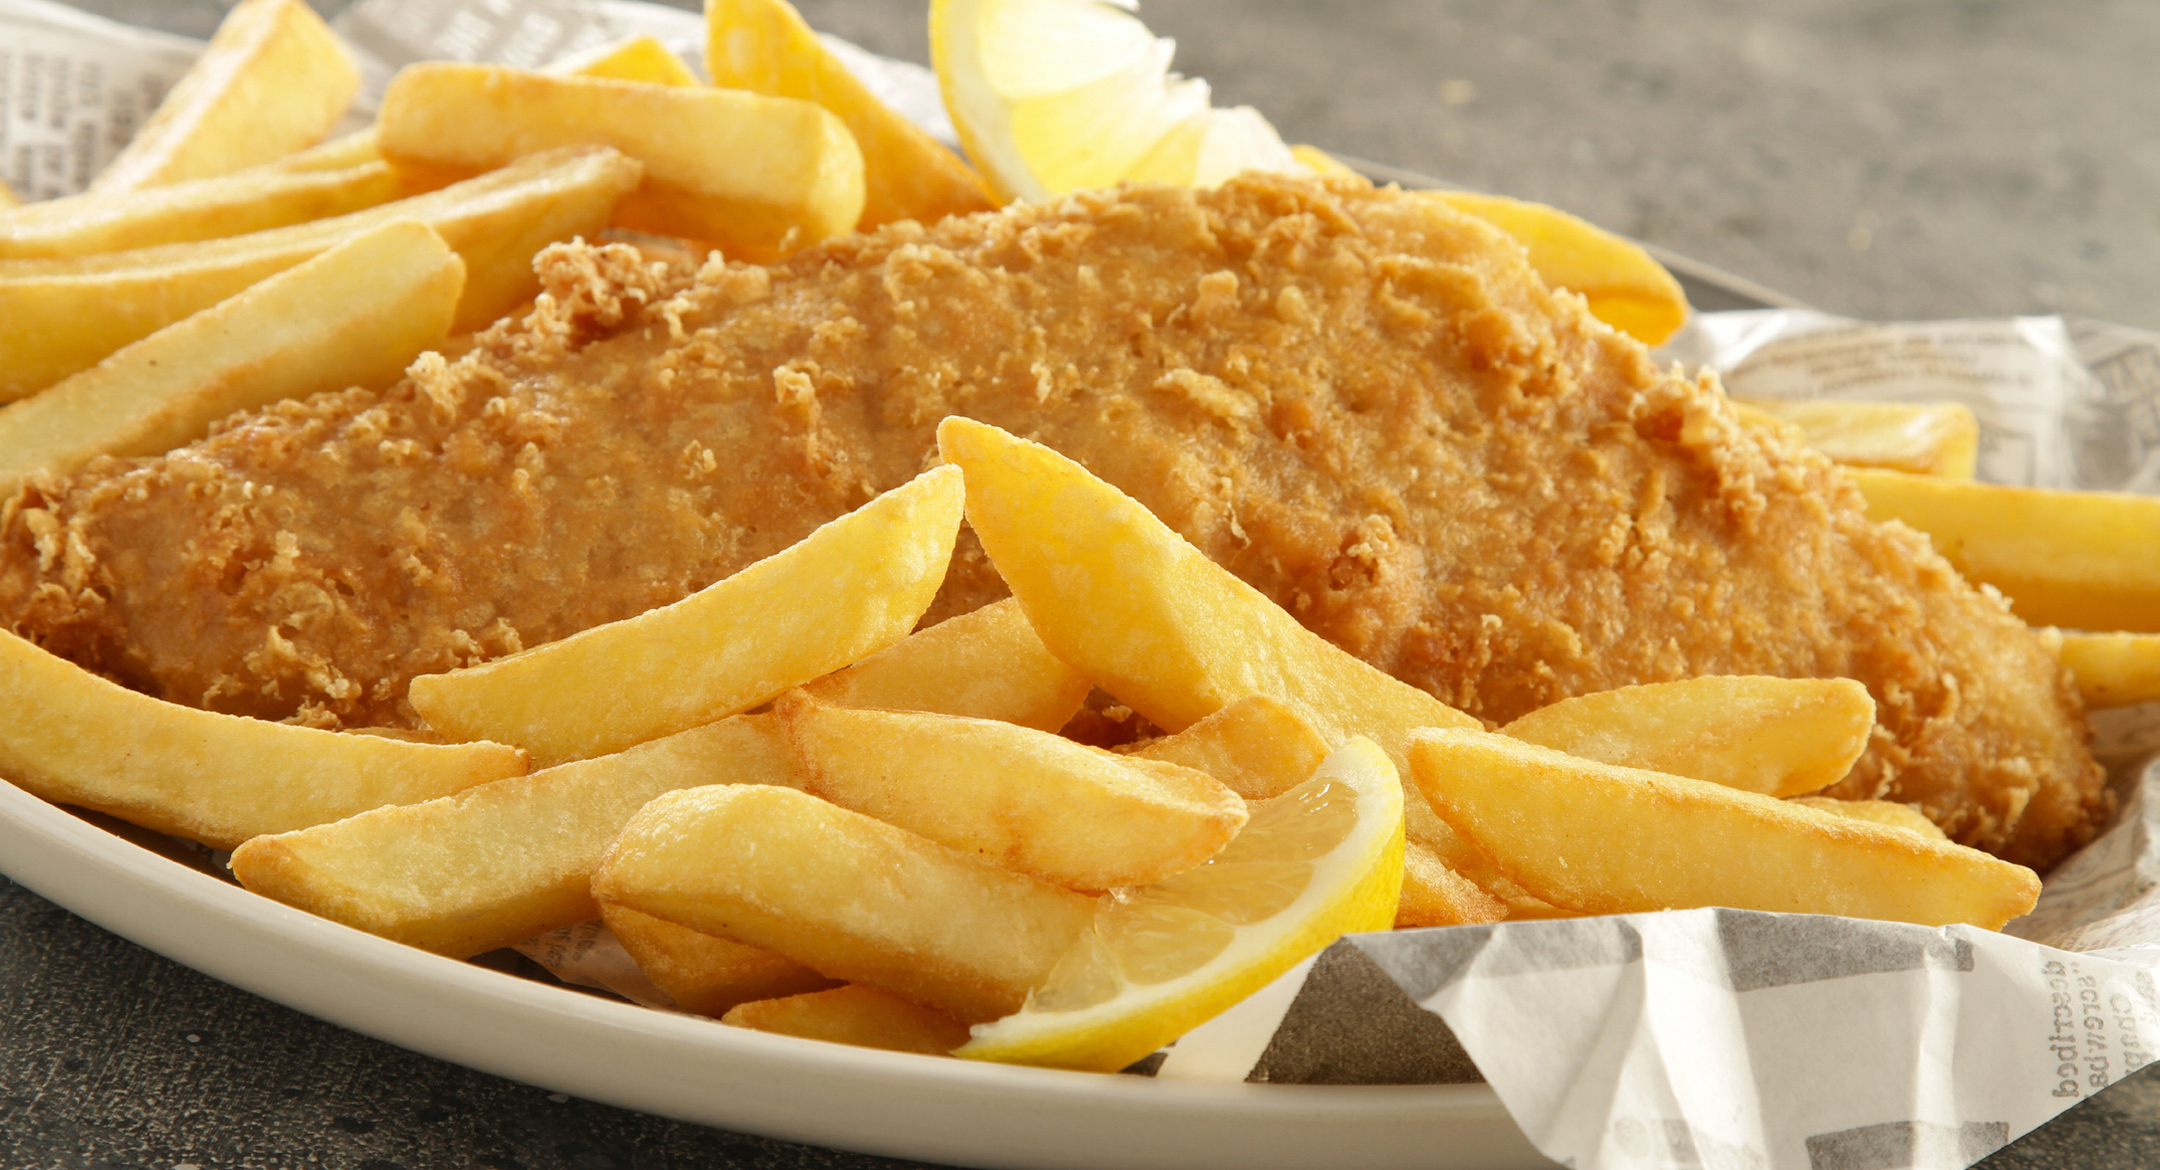 Fish and chips. Credit: Neil Langan/Shutterstock.com